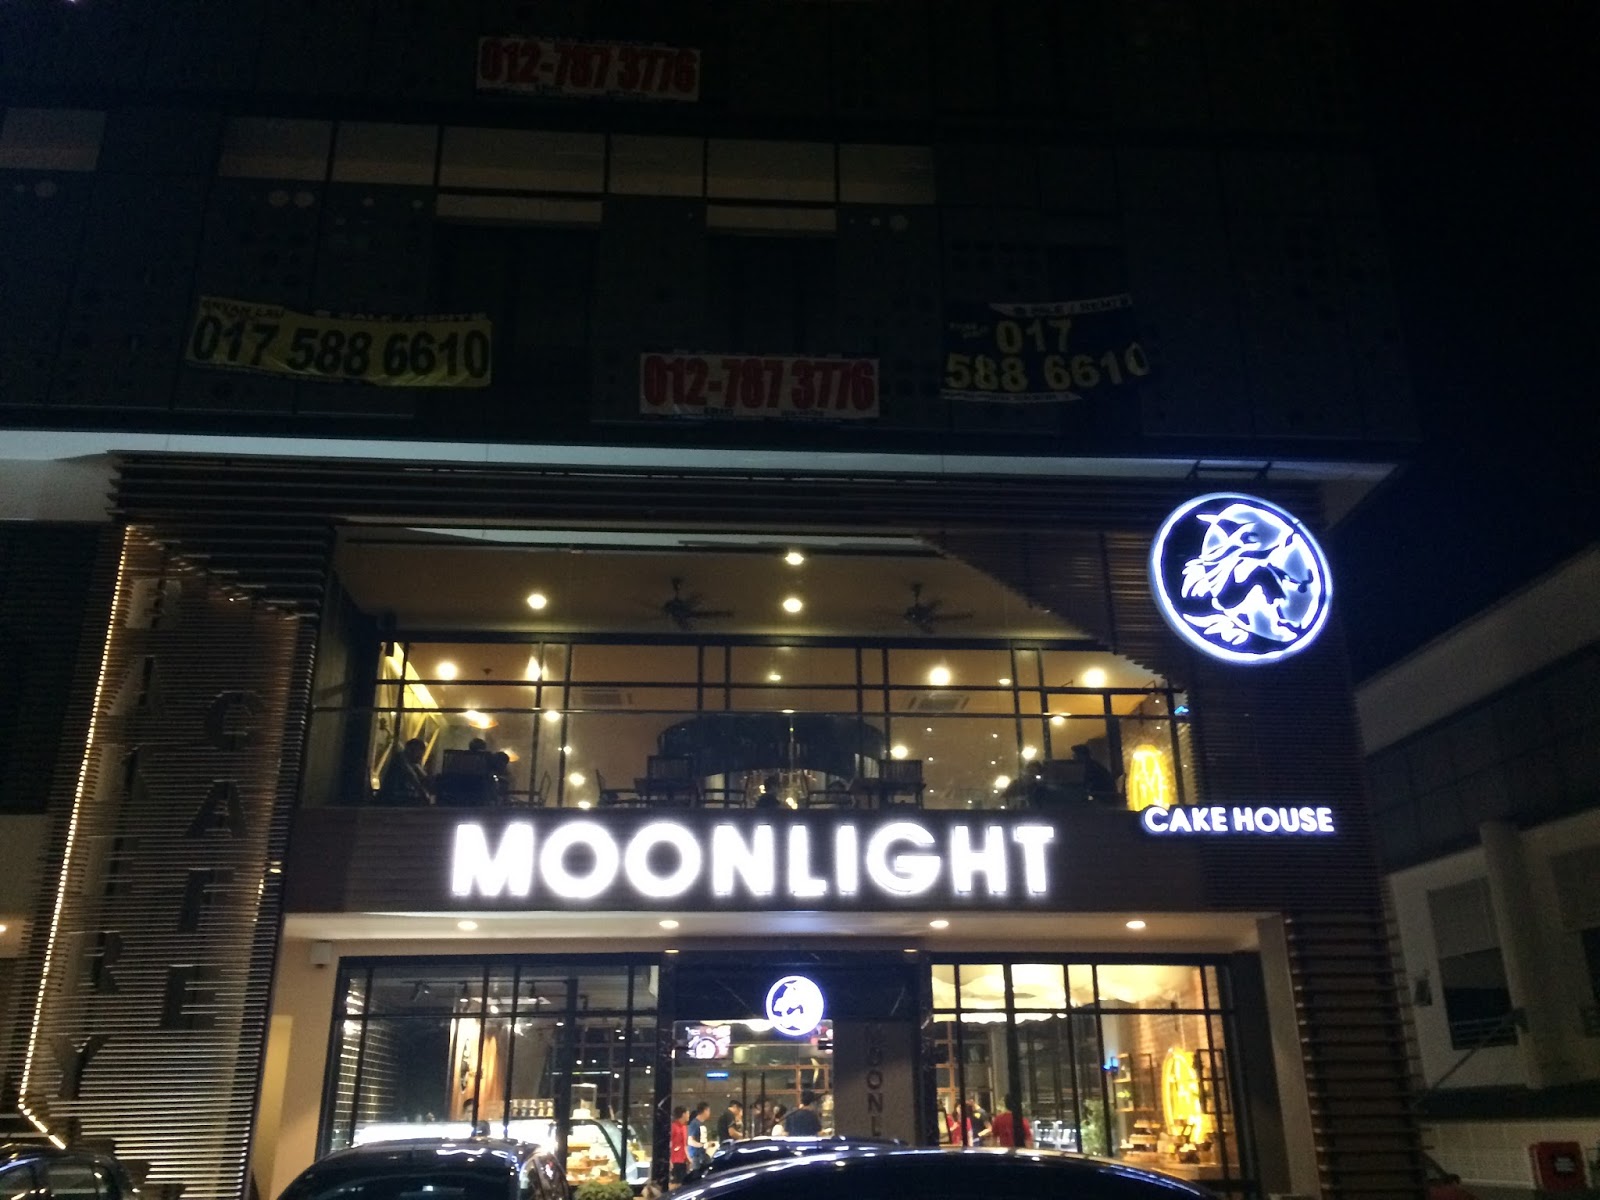 Moonlight cafe puchong